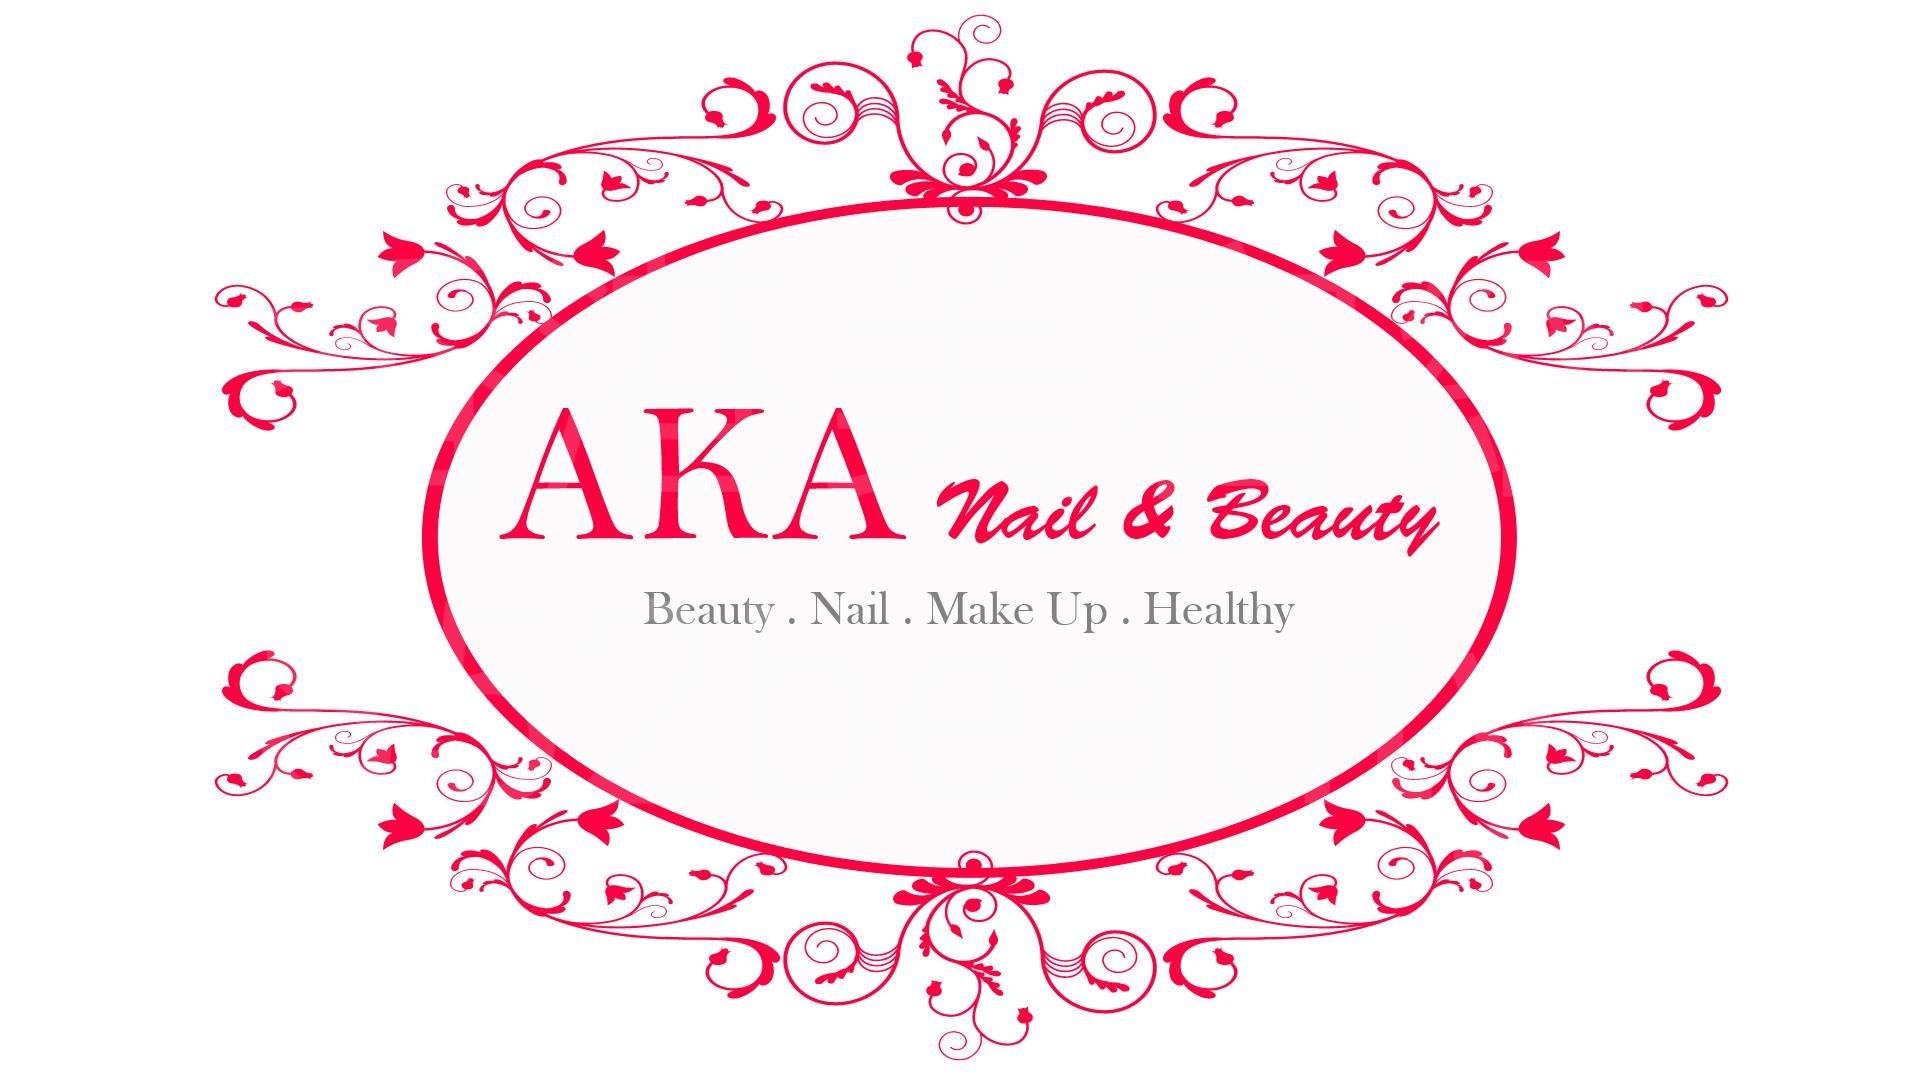 香港美容網 Hong Kong Beauty Salon 美容院 / 美容師: AKA Nail & Beauty